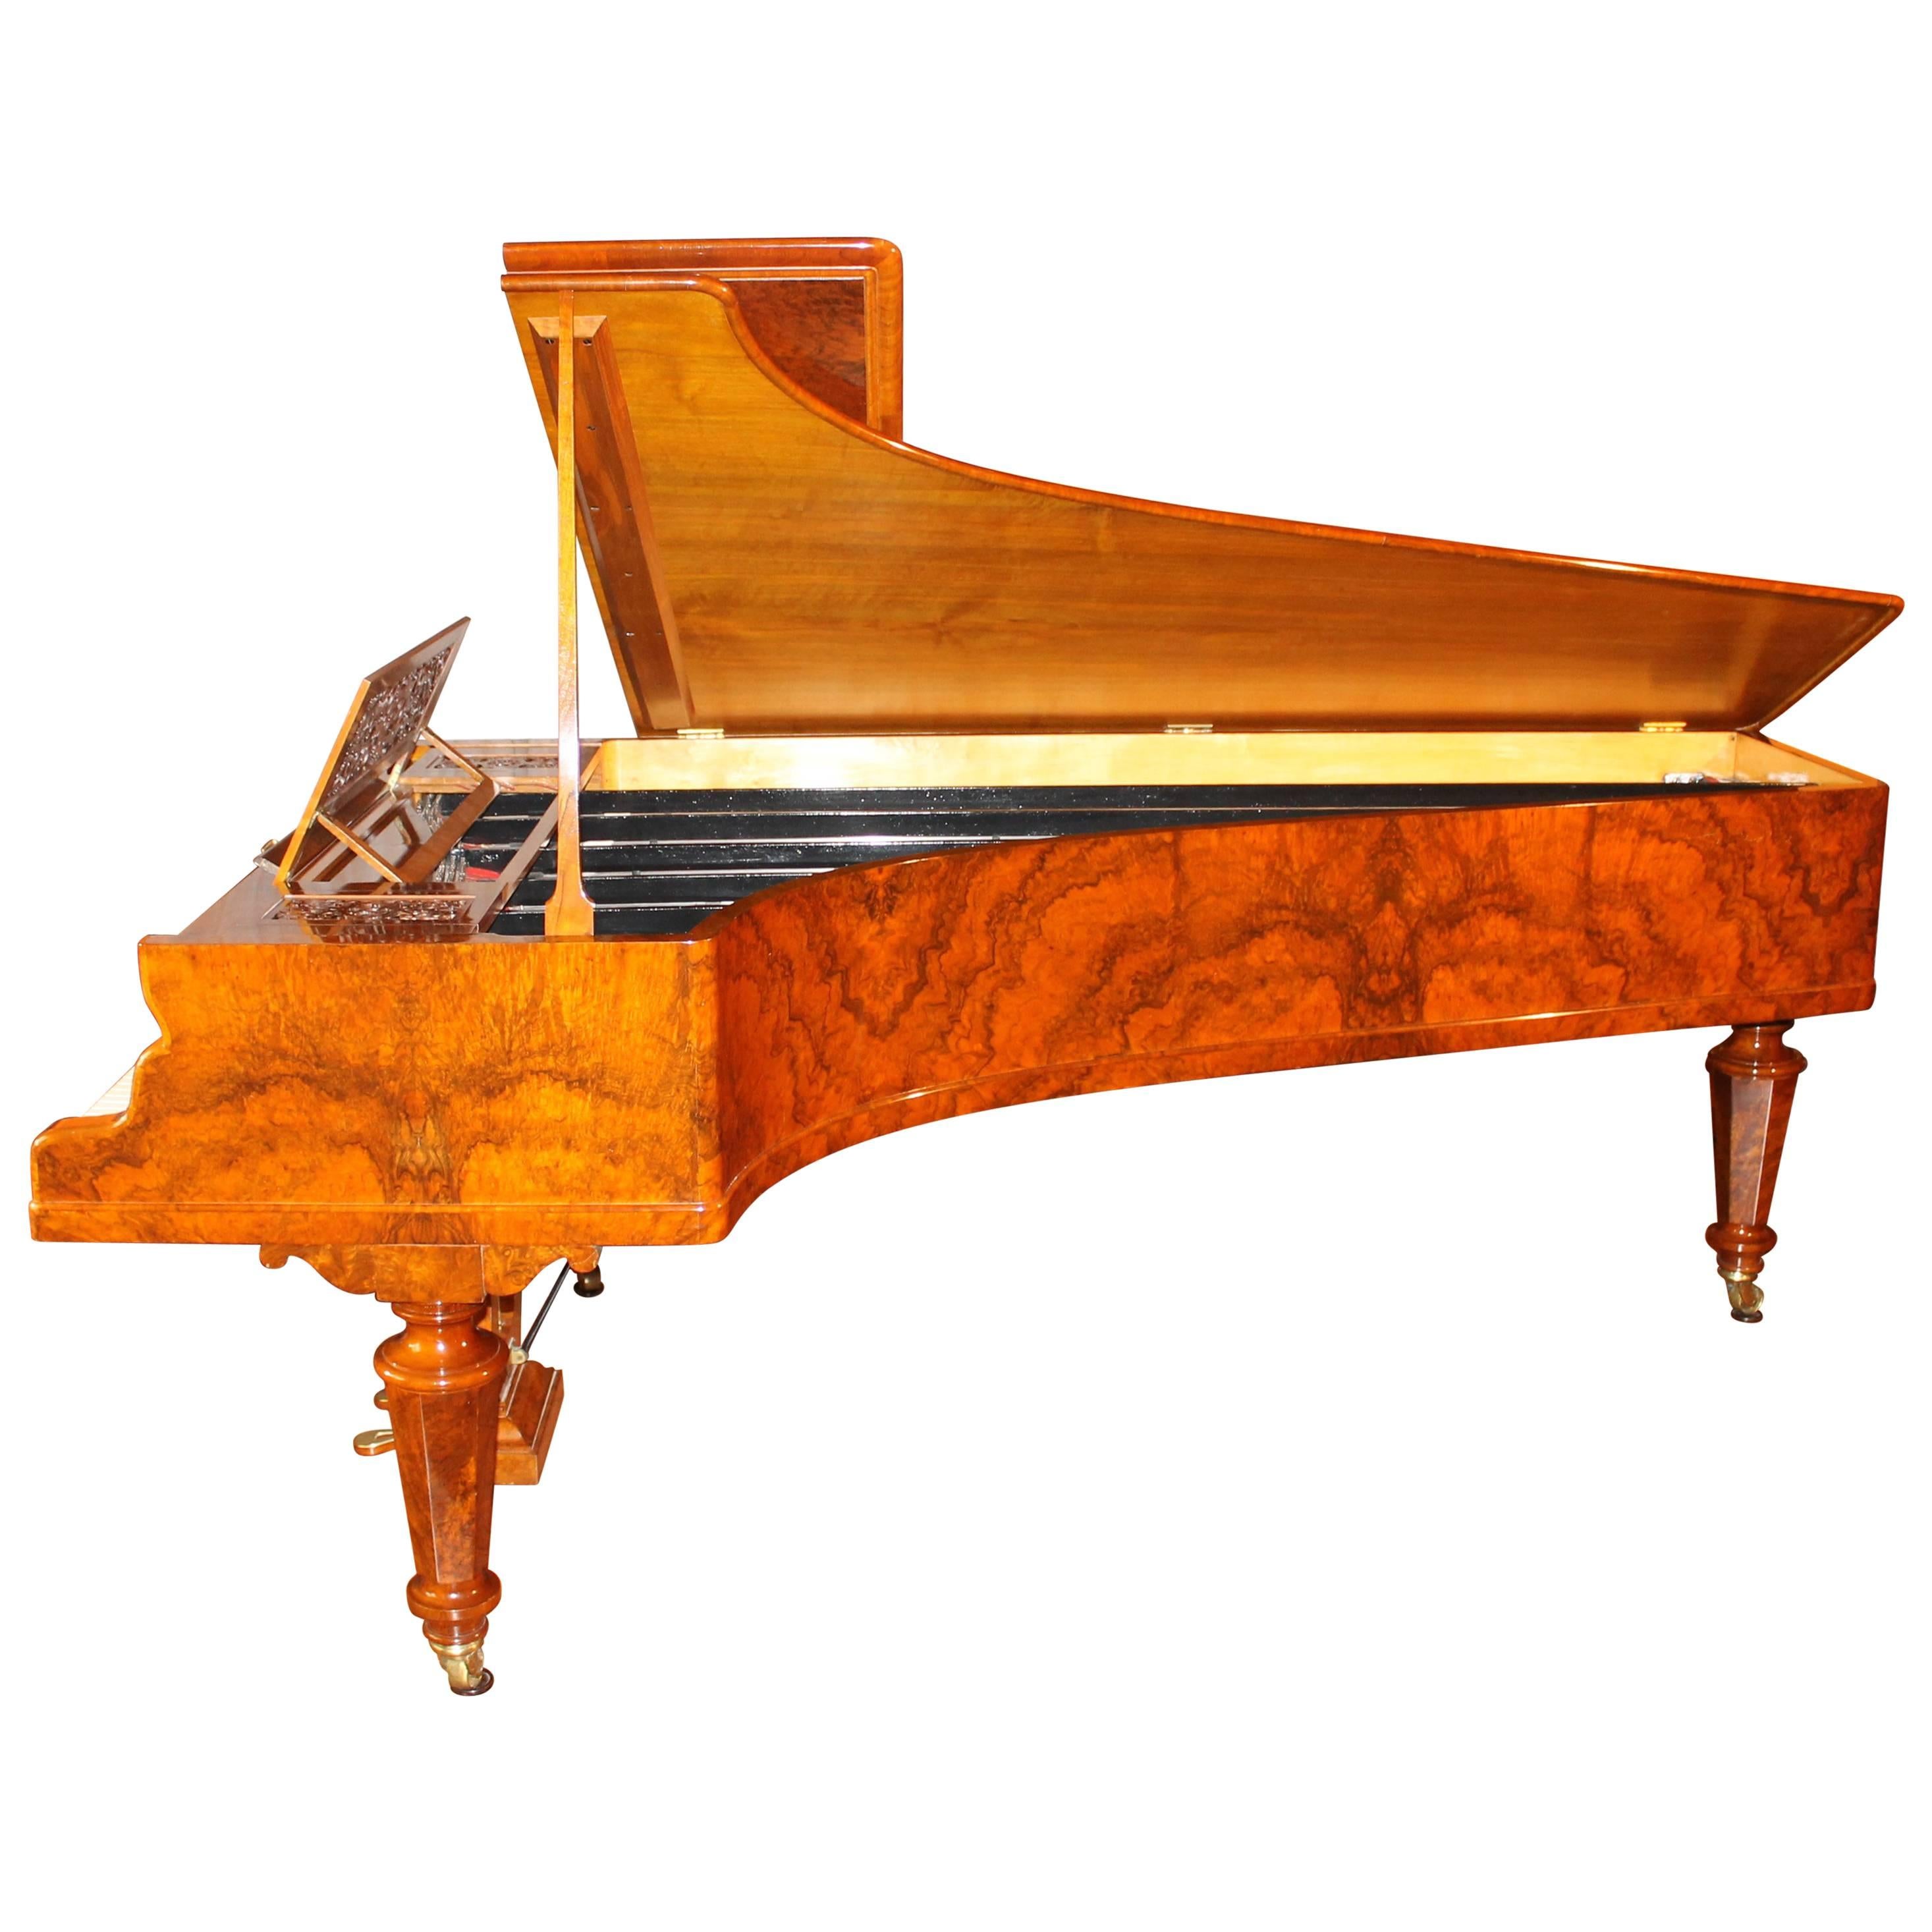 "Erard de Concert" Grand Piano, London, 1860